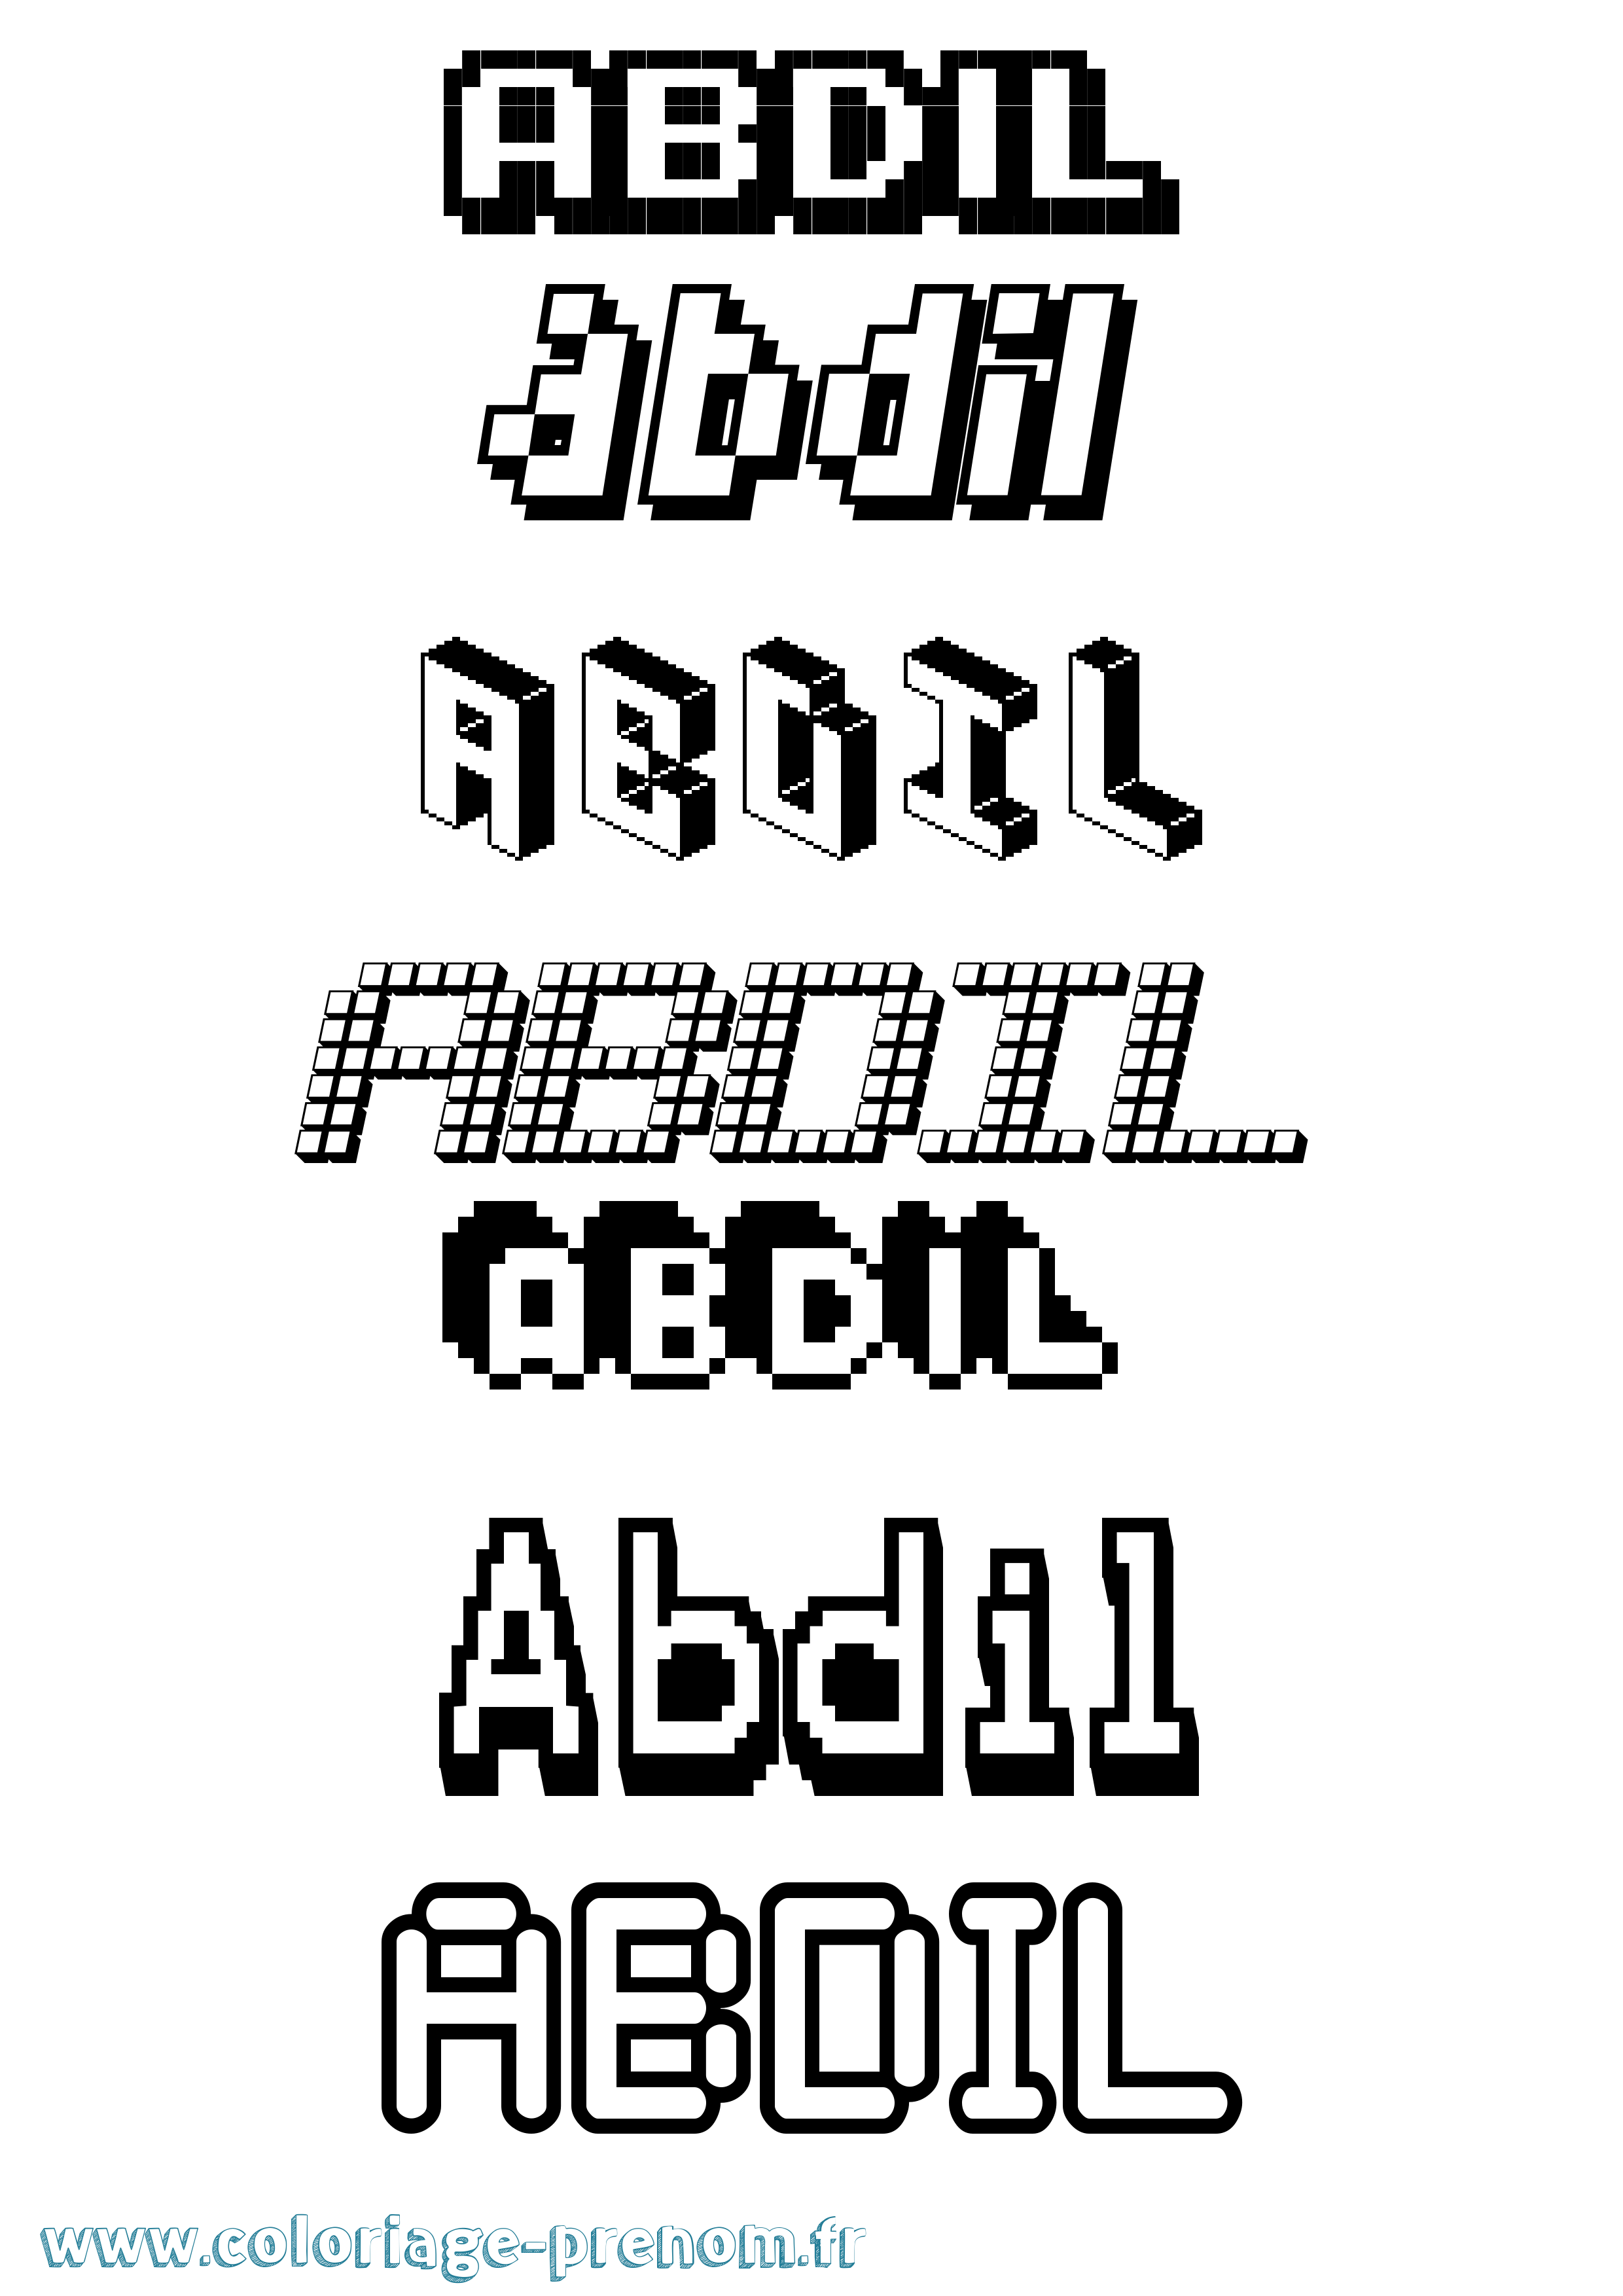 Coloriage prénom Abdil Pixel